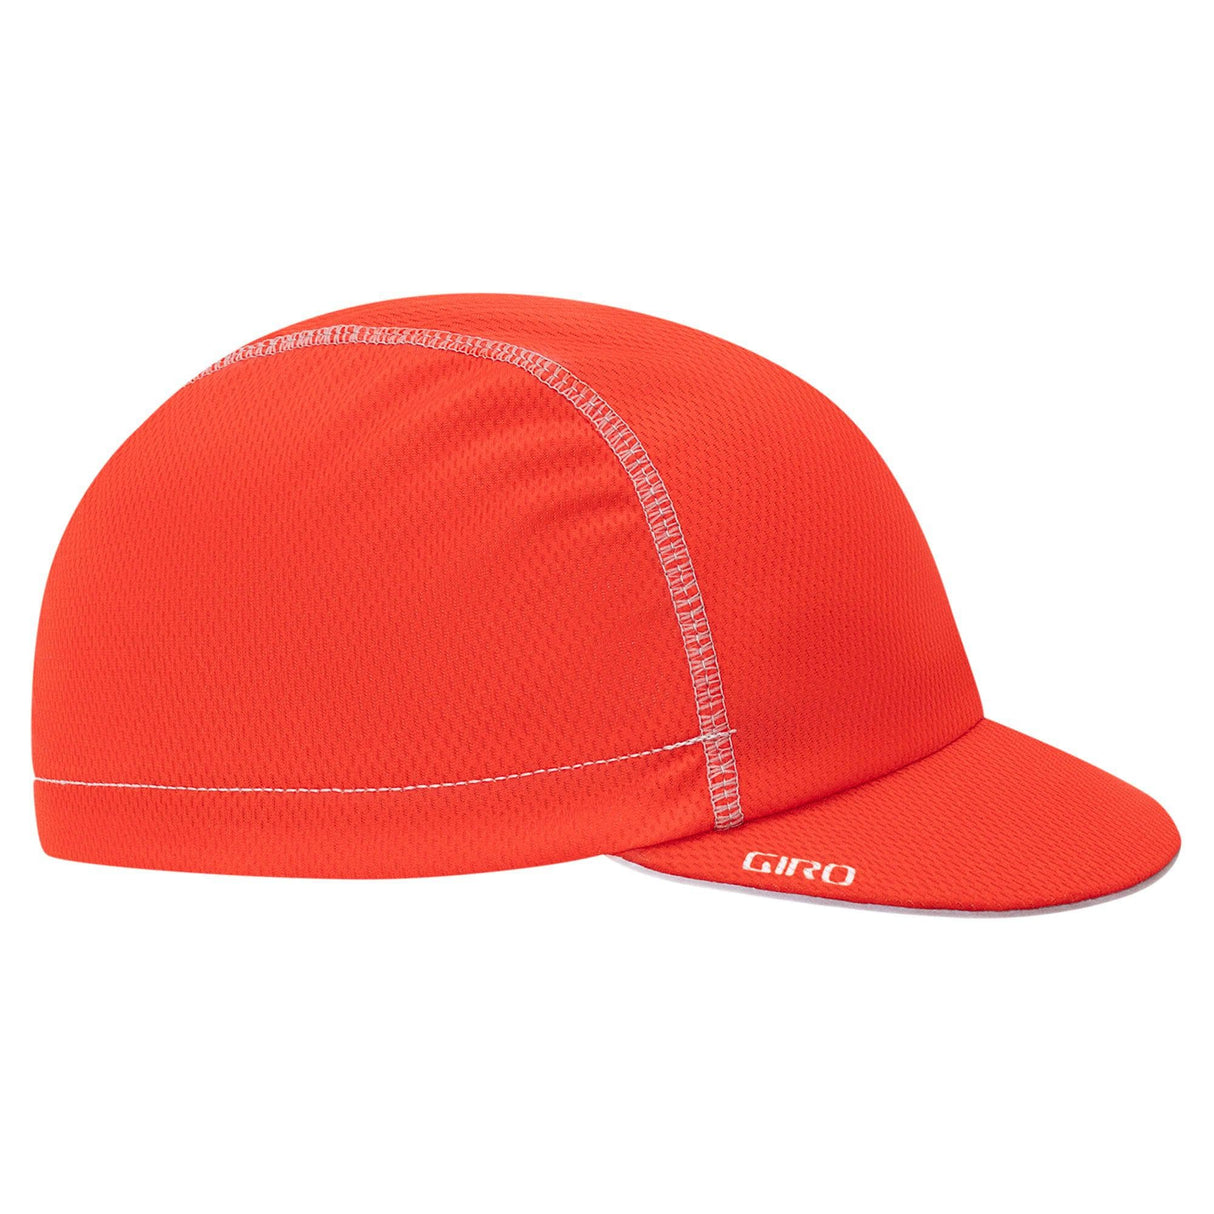 Giro Peloton Cap 2021: Bright Red One Size